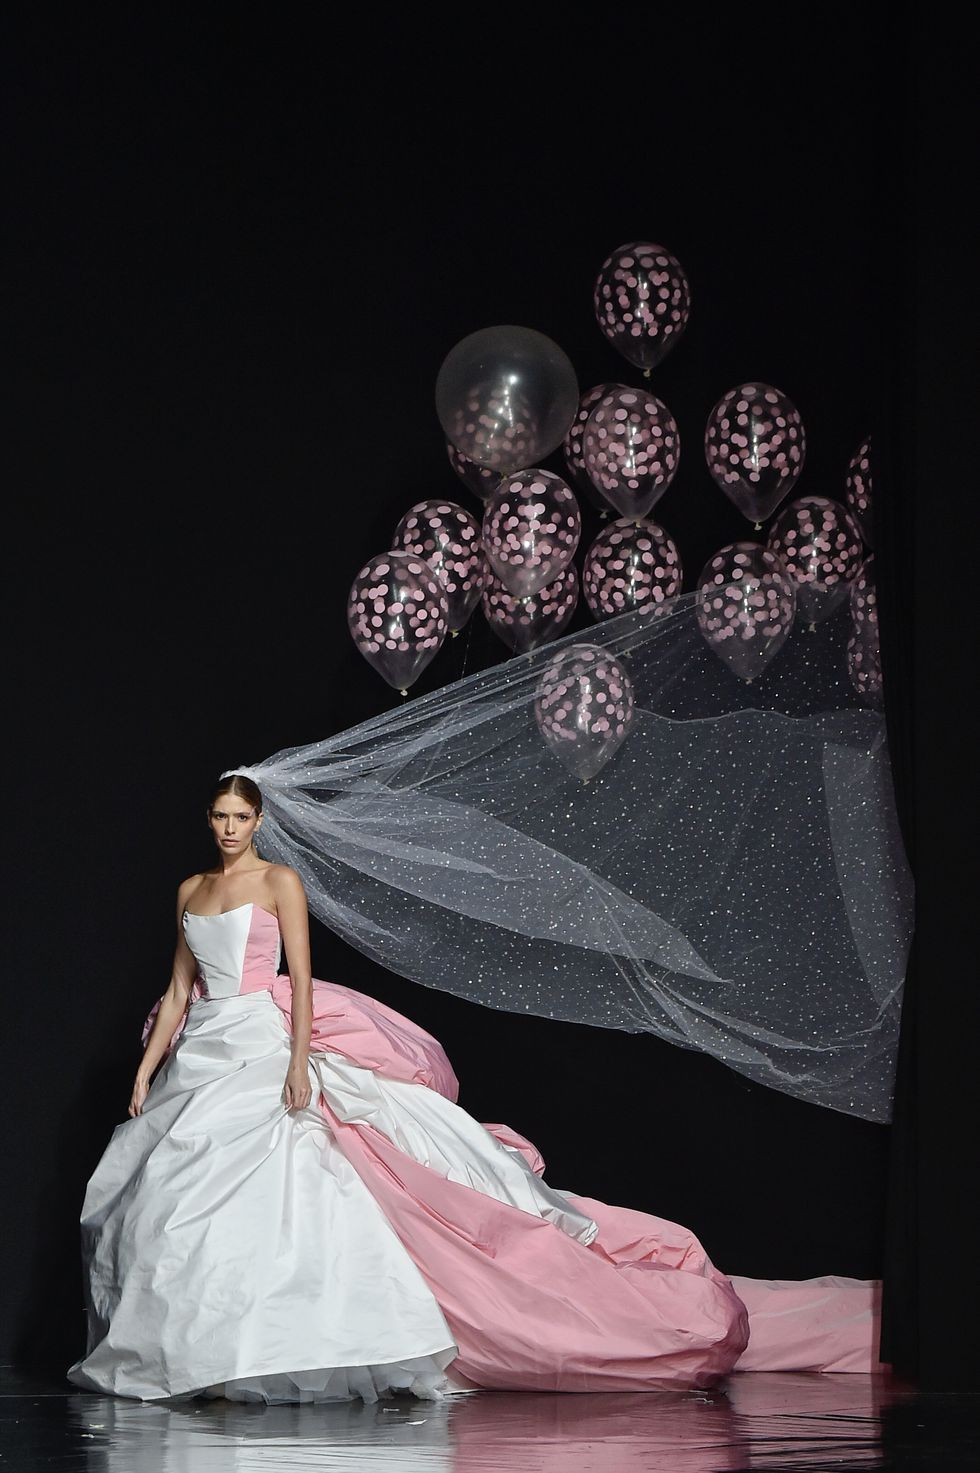 Aile Princess/Ball Gown make to order wedding dress Milk |  Devotiondresses.com